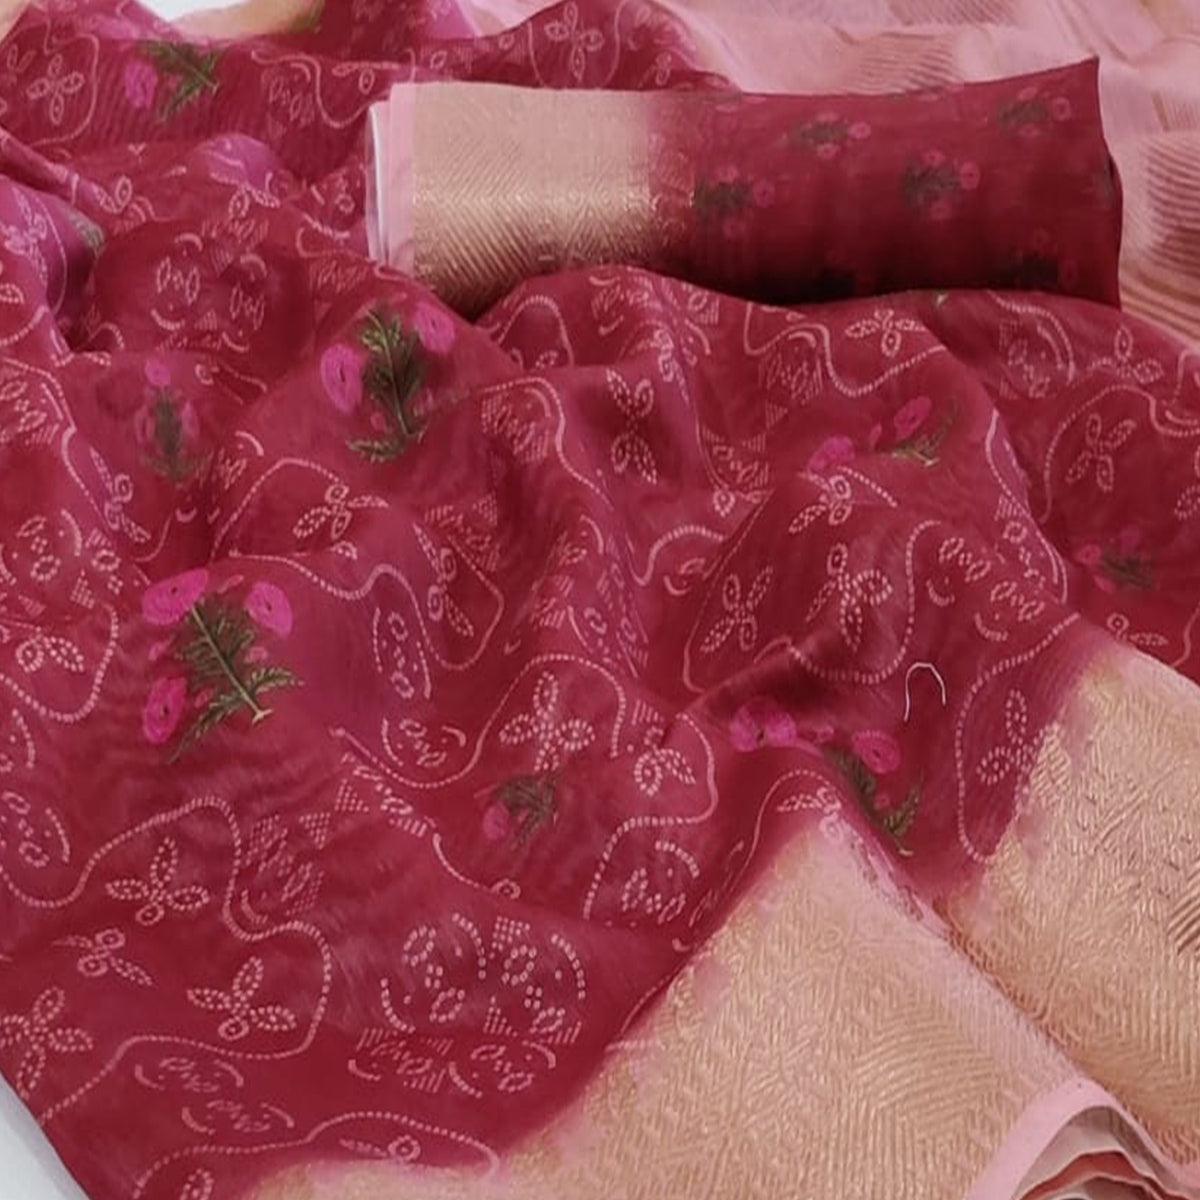 Exclusive Maroon Colored Festive Wear Woven Banarasi Silk Saree - Peachmode